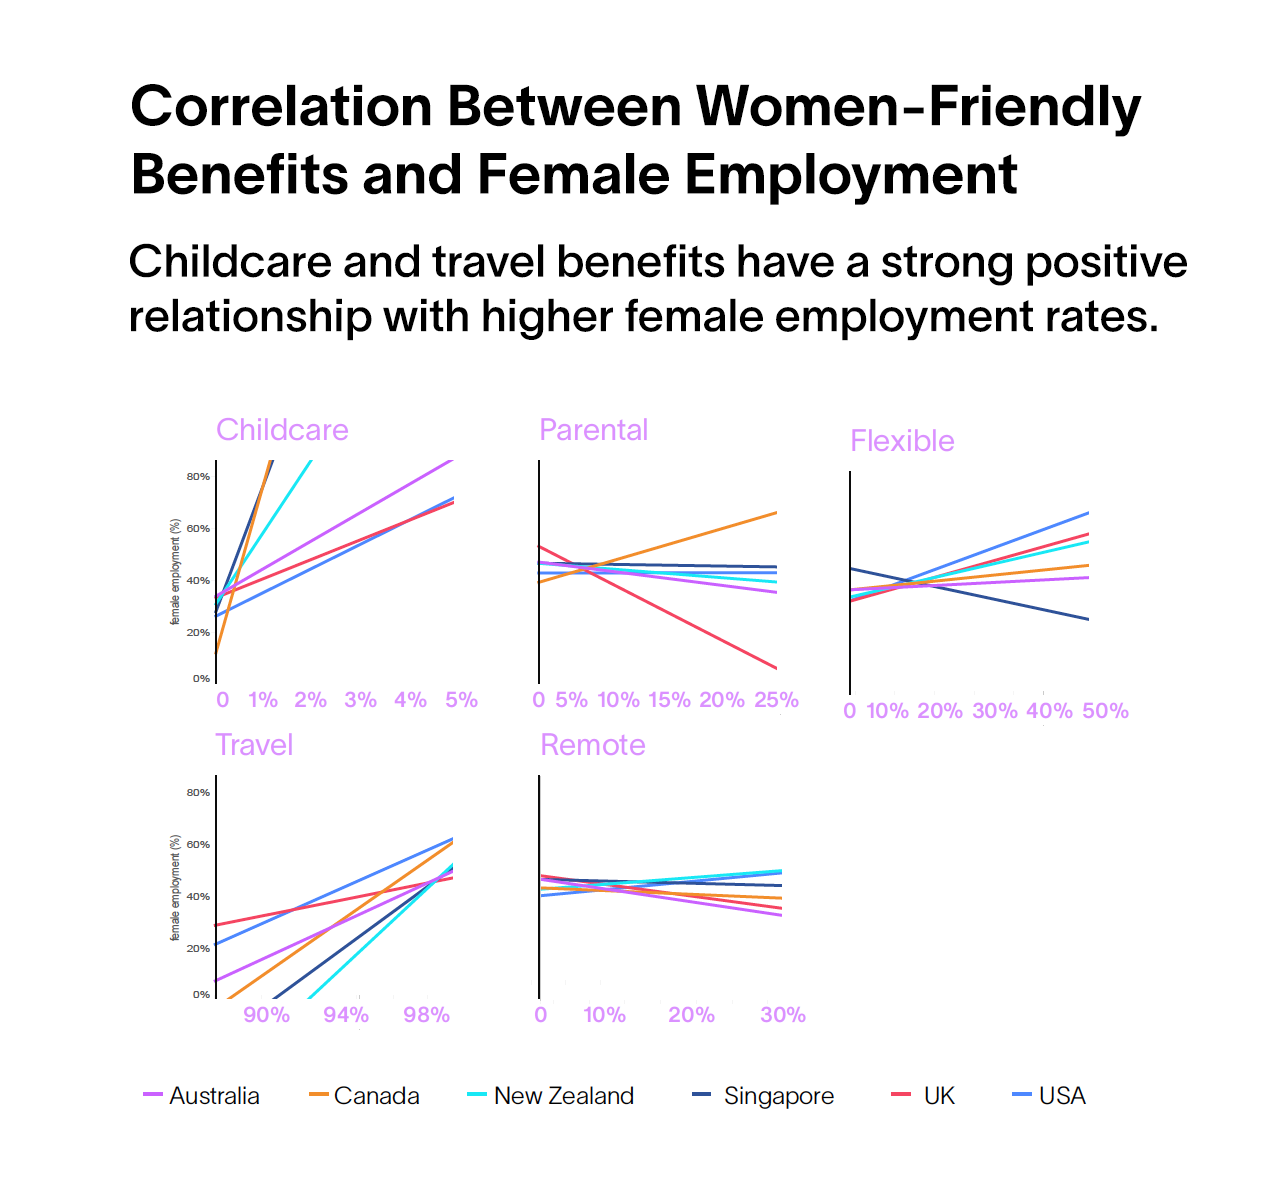 Correlationbetween women-friendly benefits and female employment